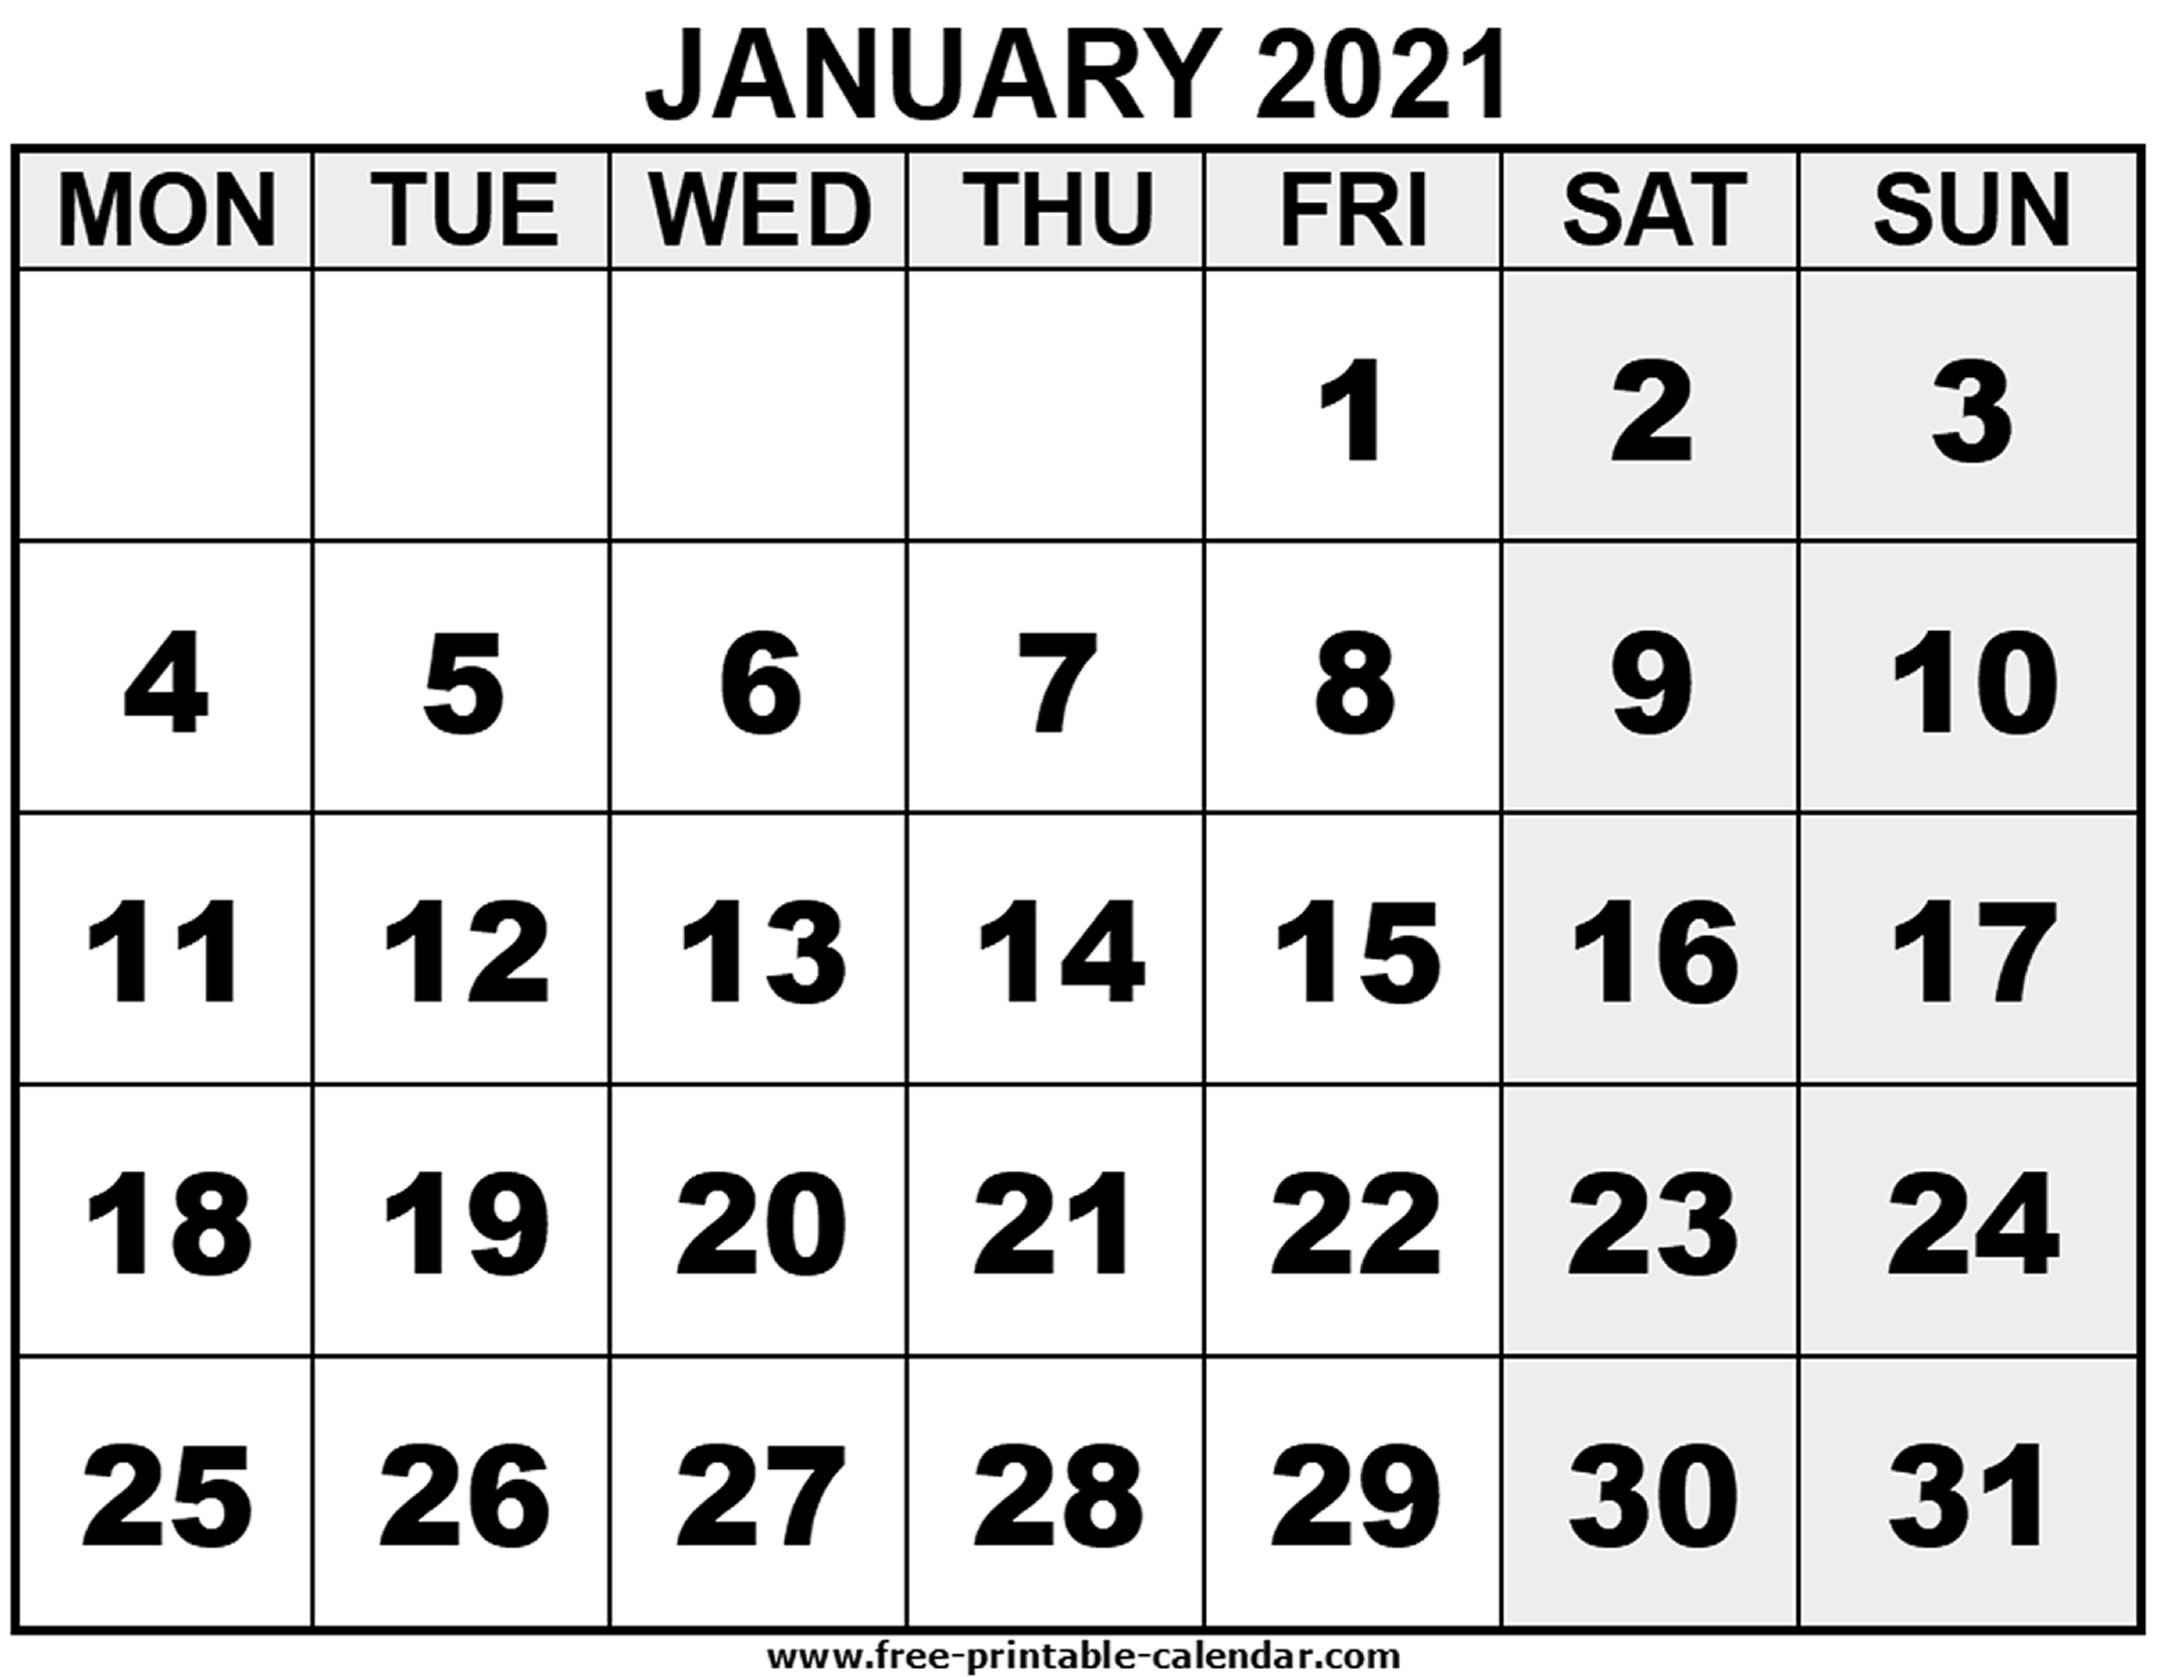 2021 January - Free-Printable-Calendar-January 2021 Calendar Printable Free Monthly